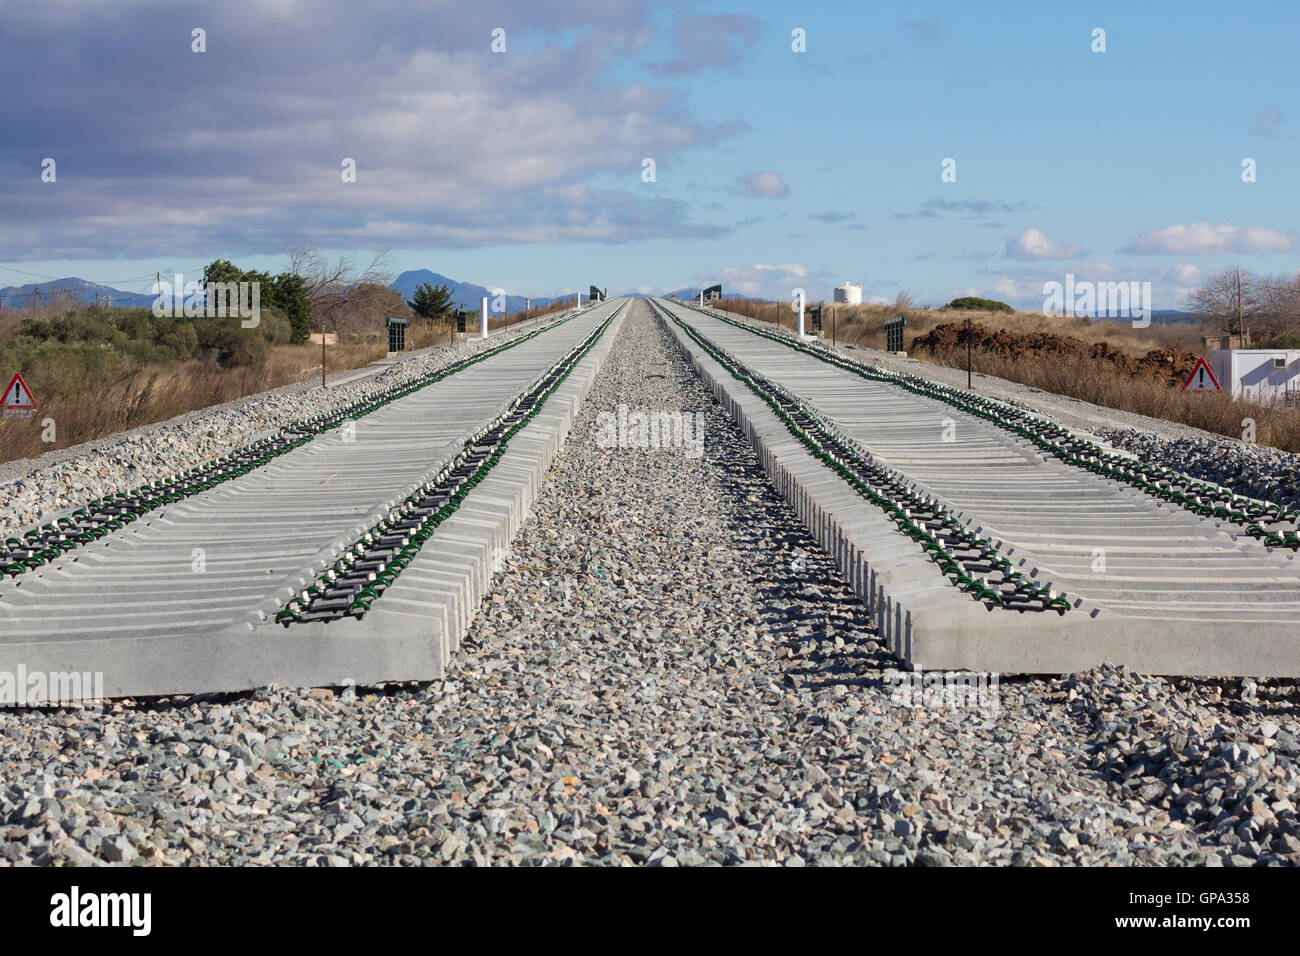 Railway on construction, gravel and railway sleepers Stock Photo